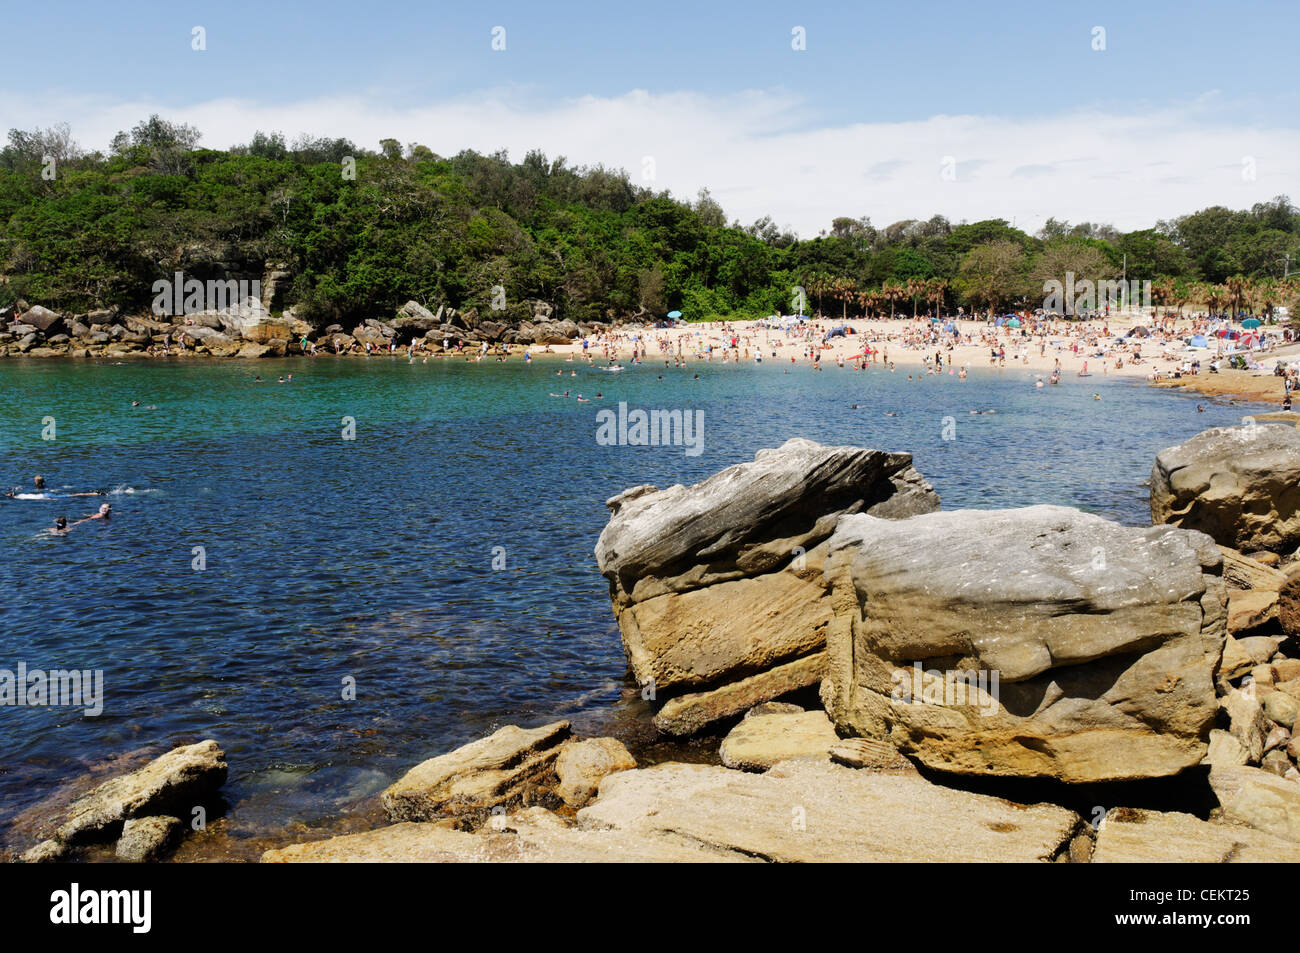 The beach at Fairy Bower, Manly near Sydney Australia Stock Photo